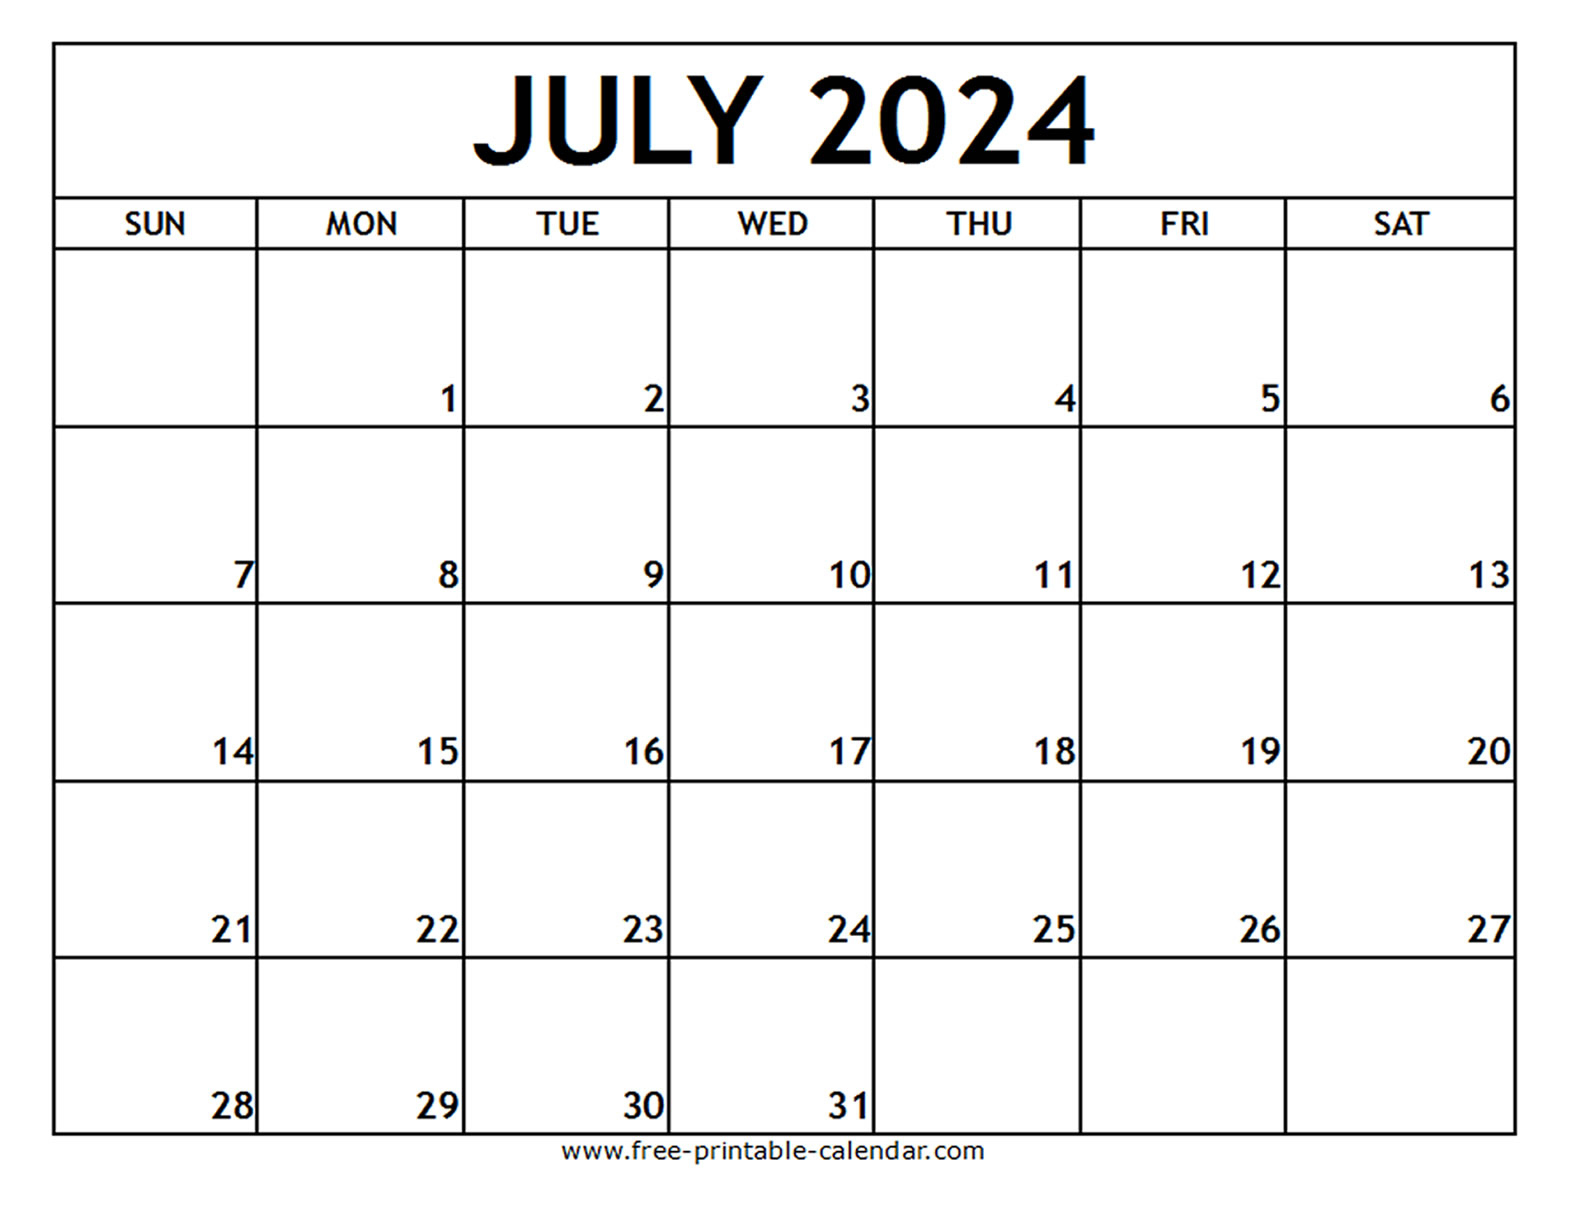 July 2024 Printable Calendar - Free-Printable-Calendar | July Monthly Calendar Template 2024